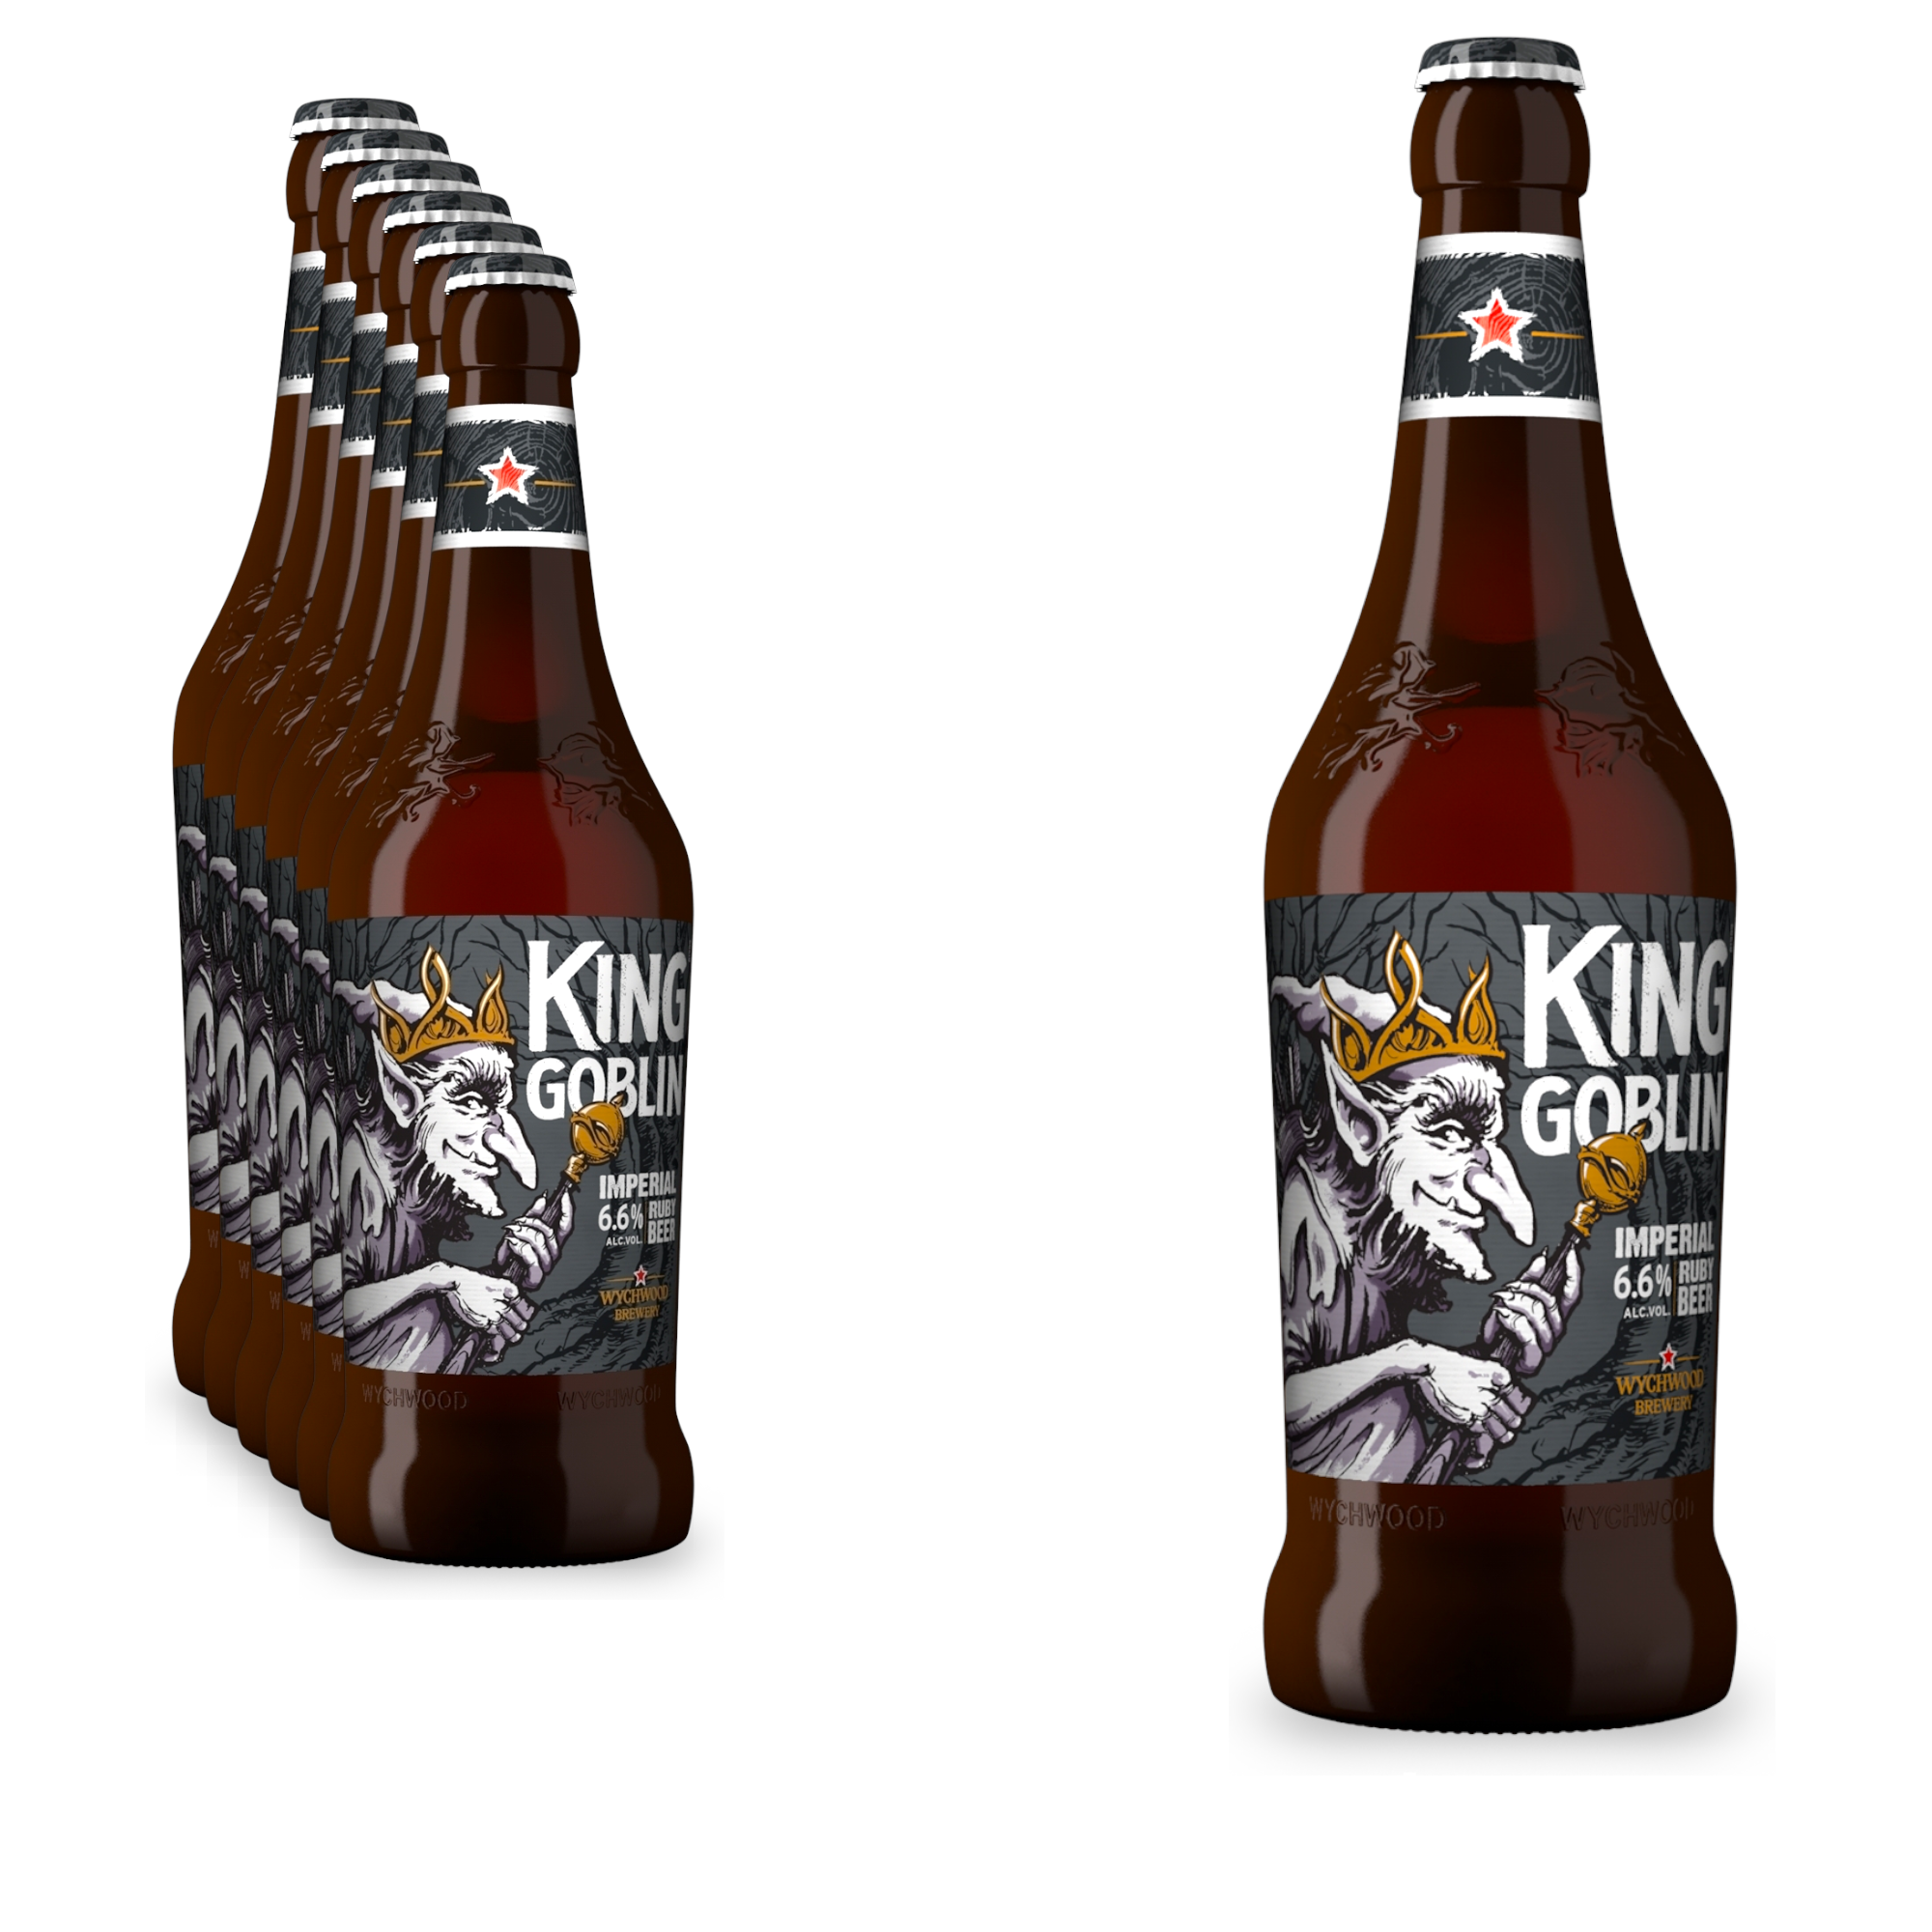 Wychwood King Goblin 0,5l- Imperial Ruby Beer mit 6,60% Vol.- Rotbier aus England